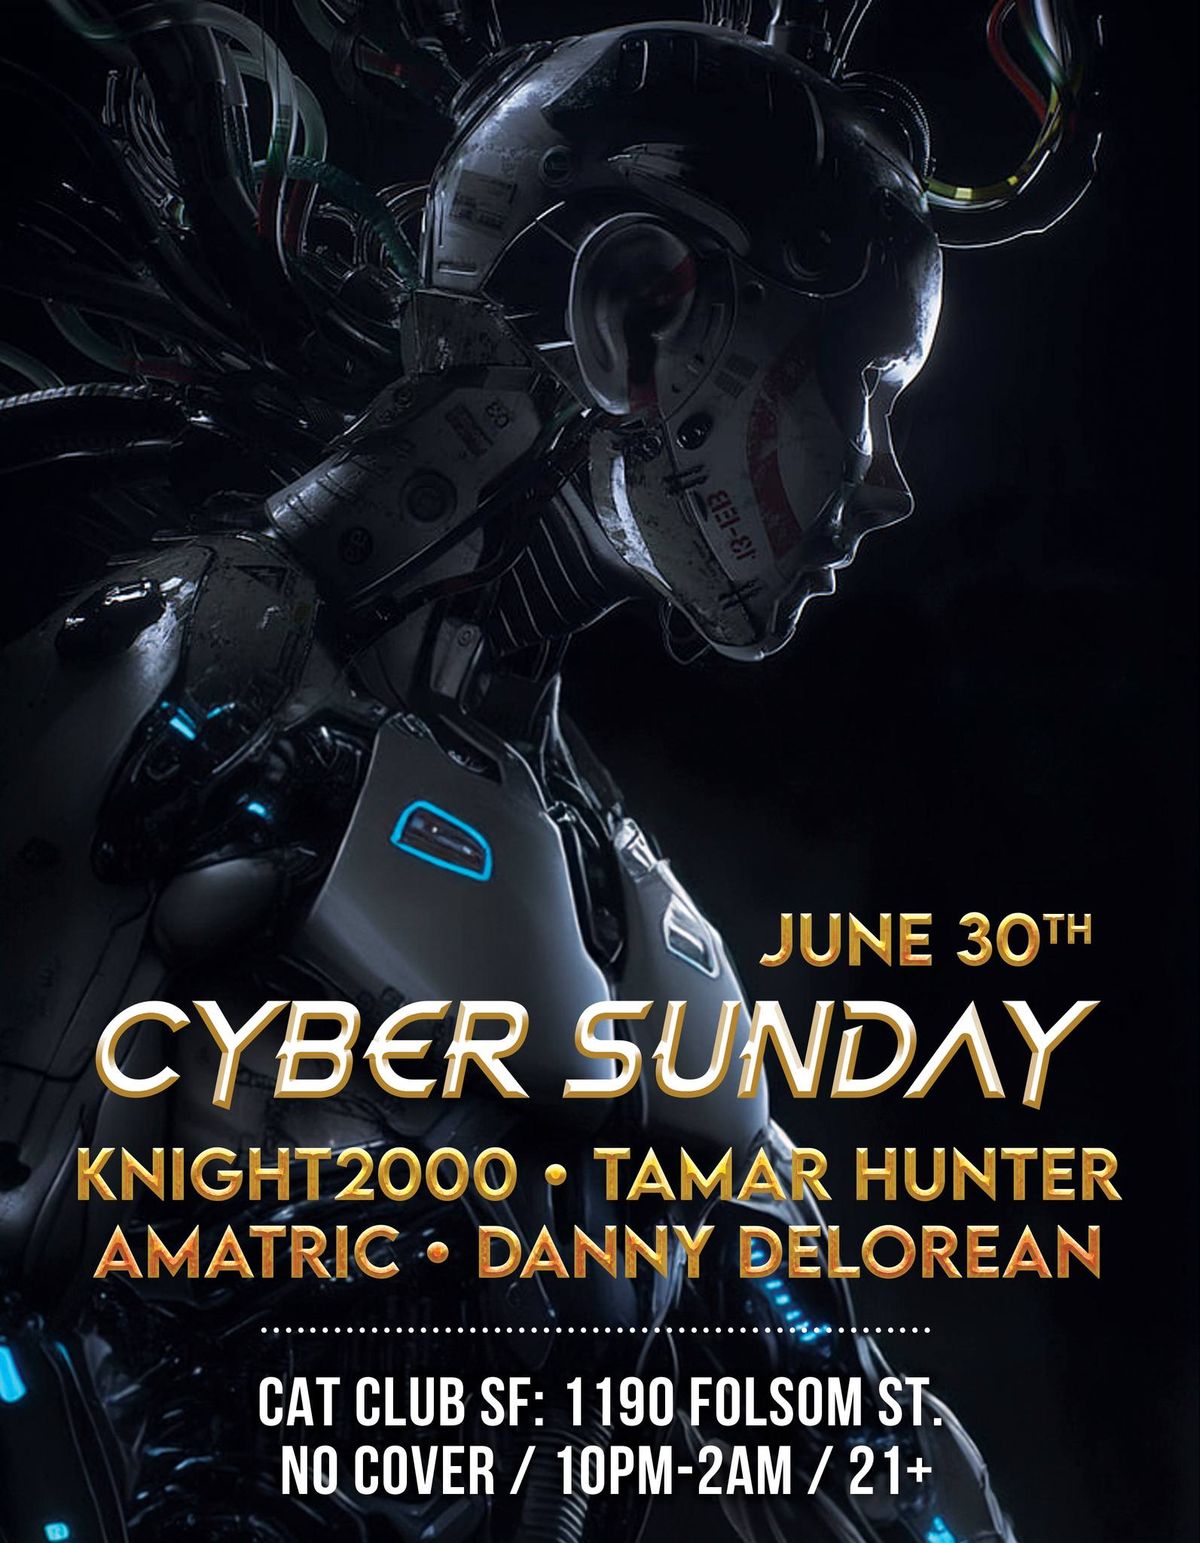 Cyber Sunday: FREE Cyberpunk\/Electro Party every Sunday (4 DJs + Retro Video Games)